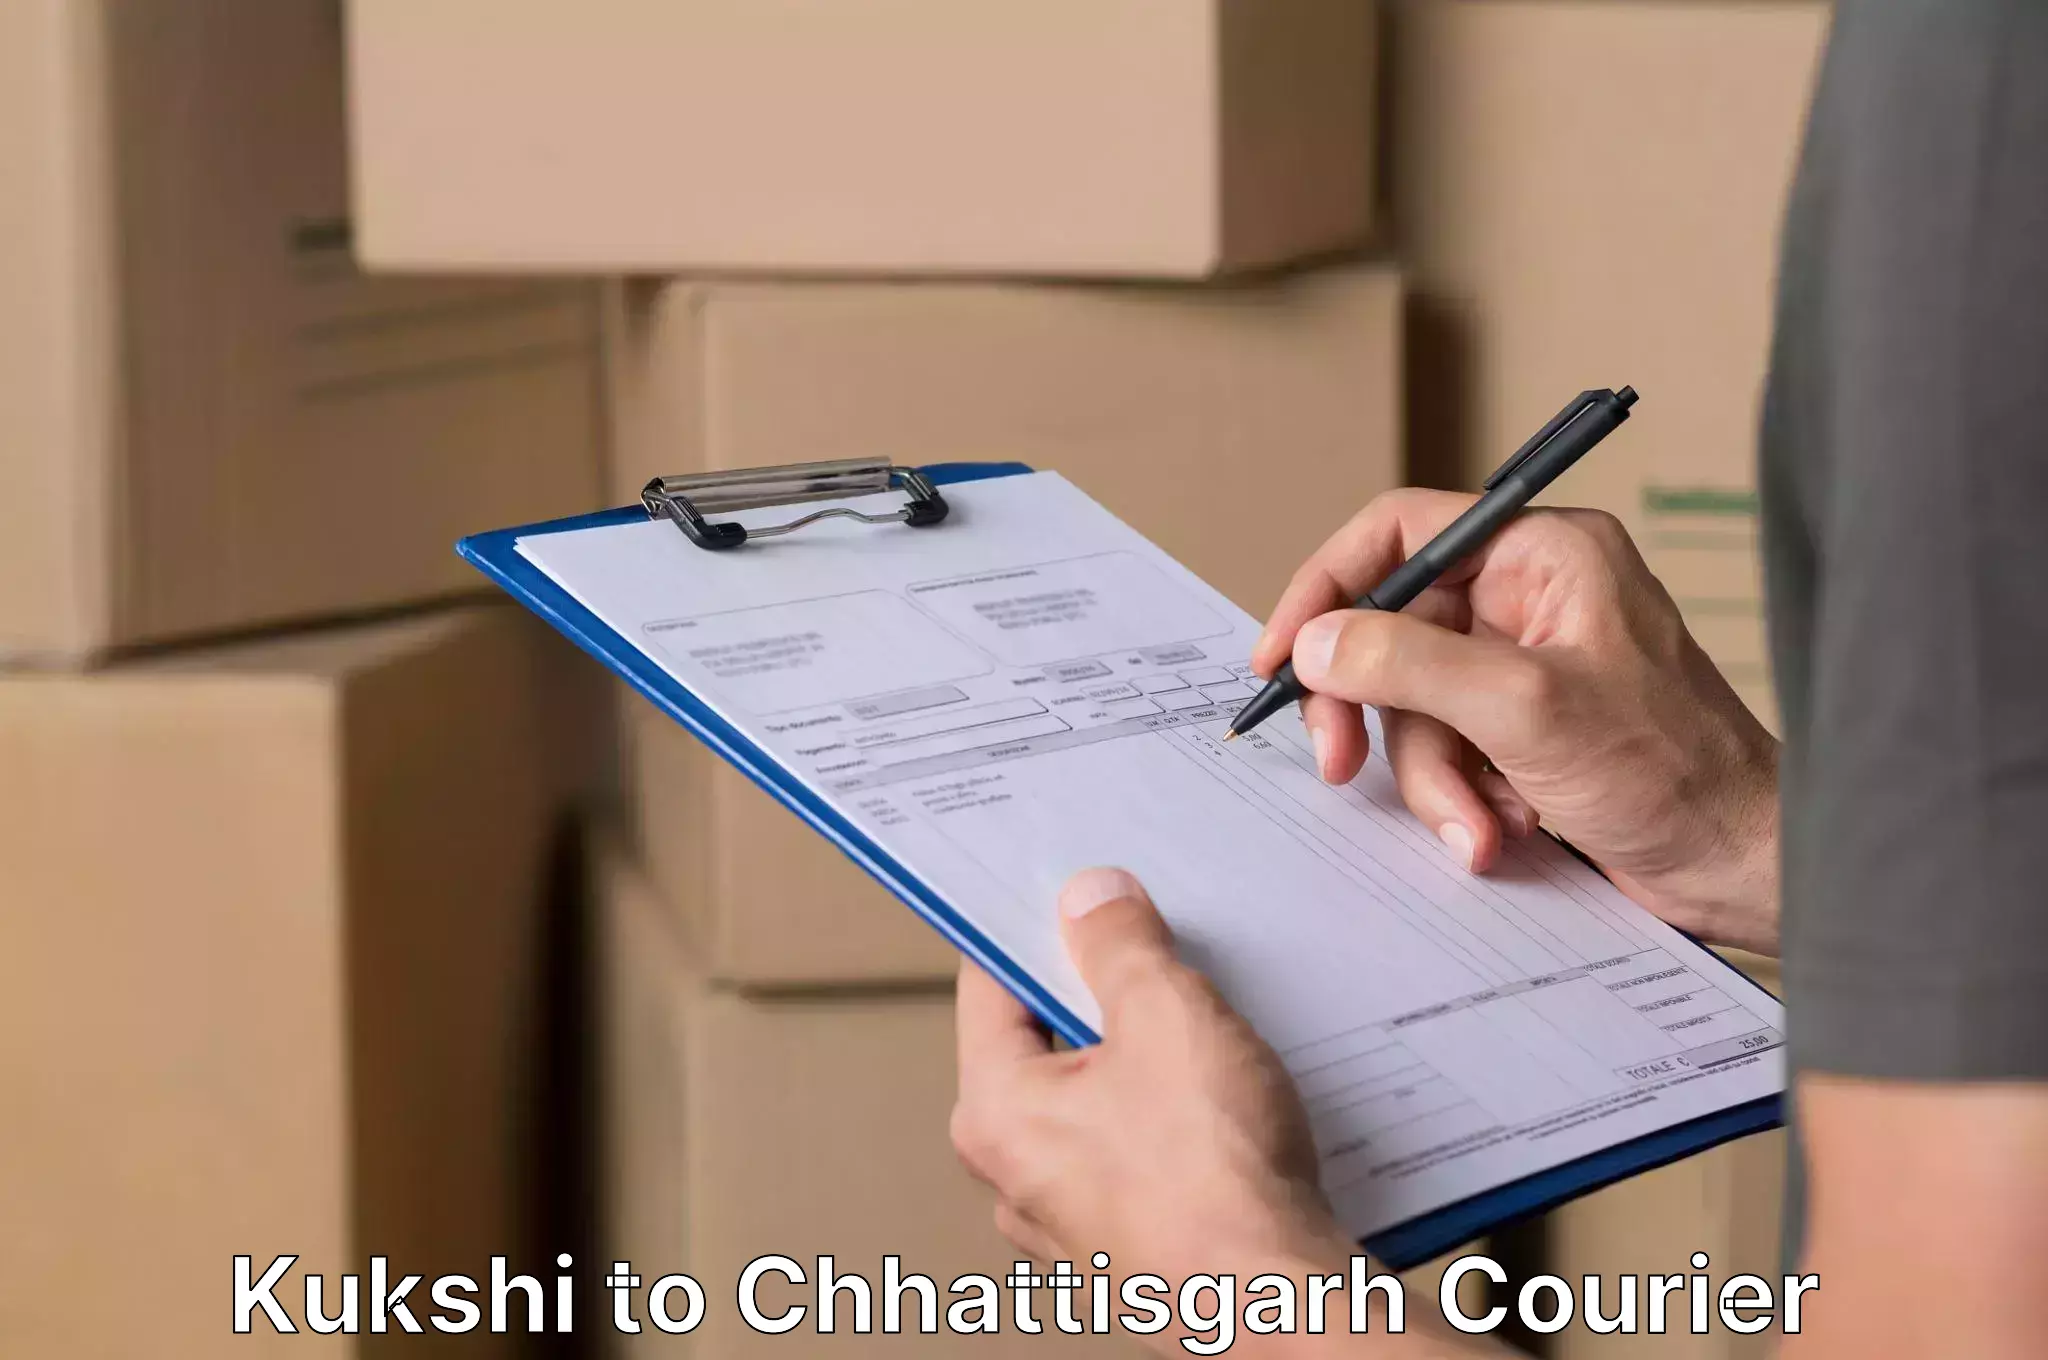 Furniture transport specialists Kukshi to Korea Chhattisgarh